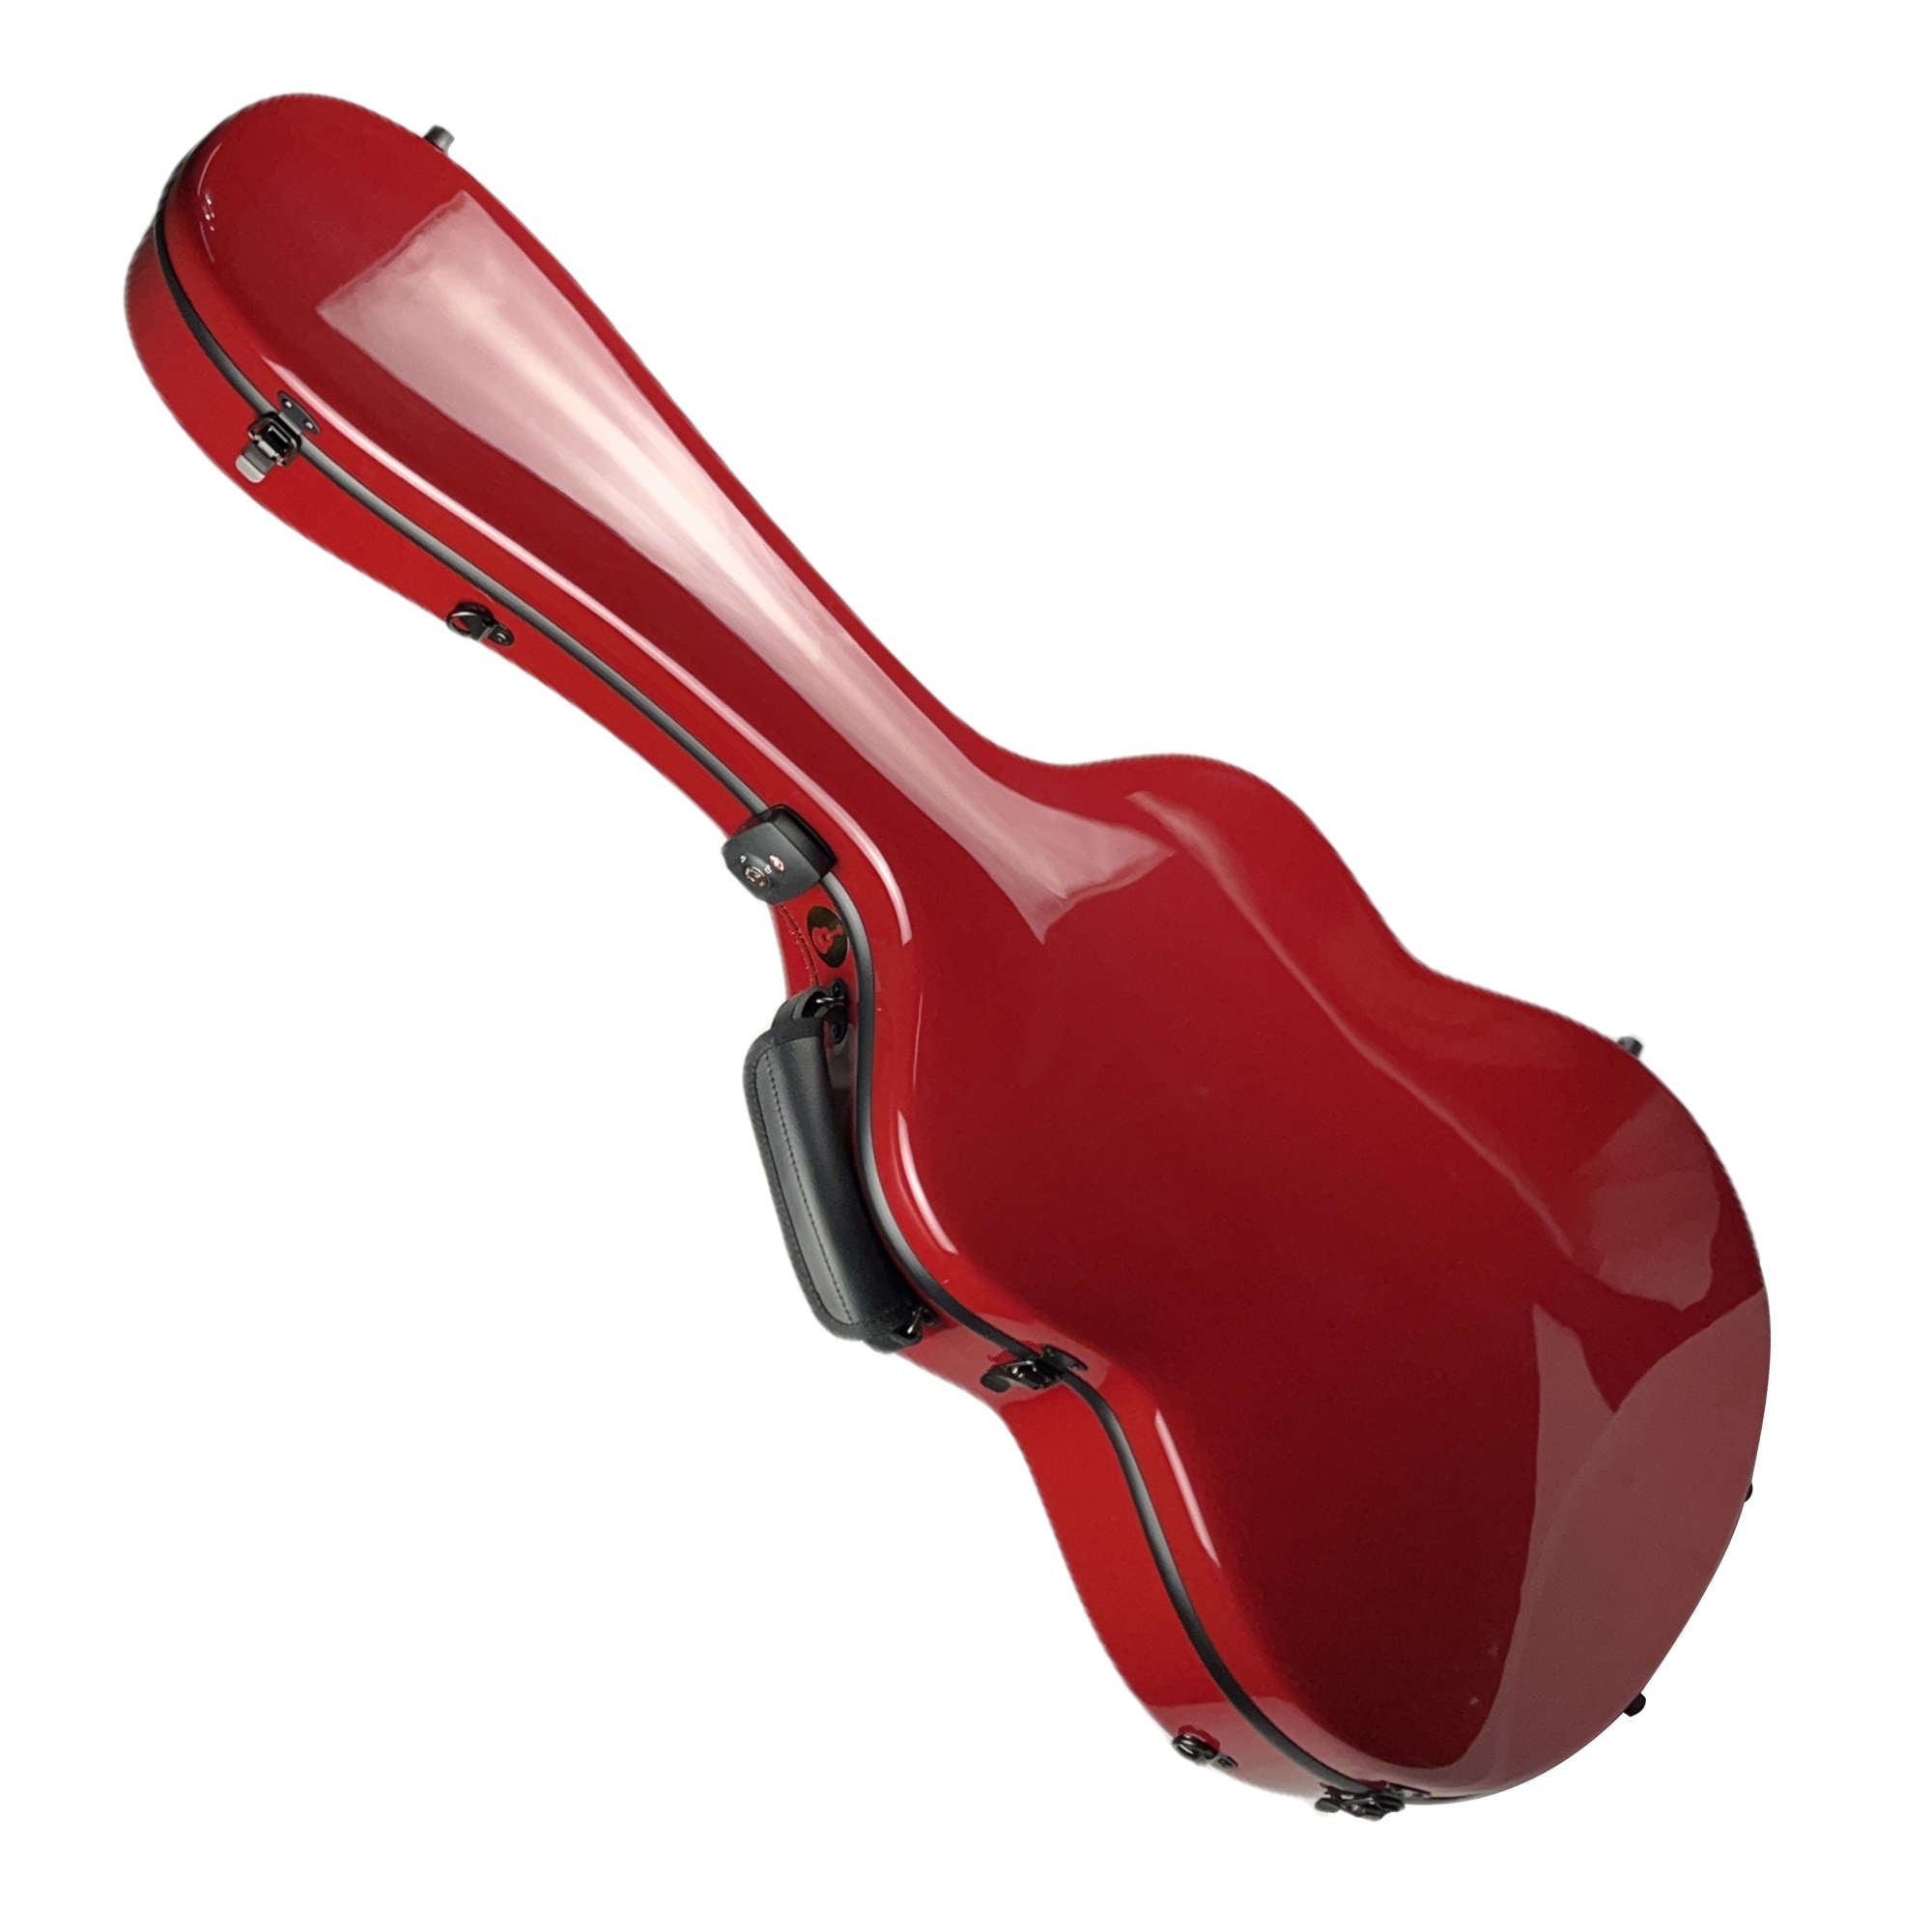 Custodia Rossa lucida in carbonio per chitarra classica acustica, chitarra flamenco